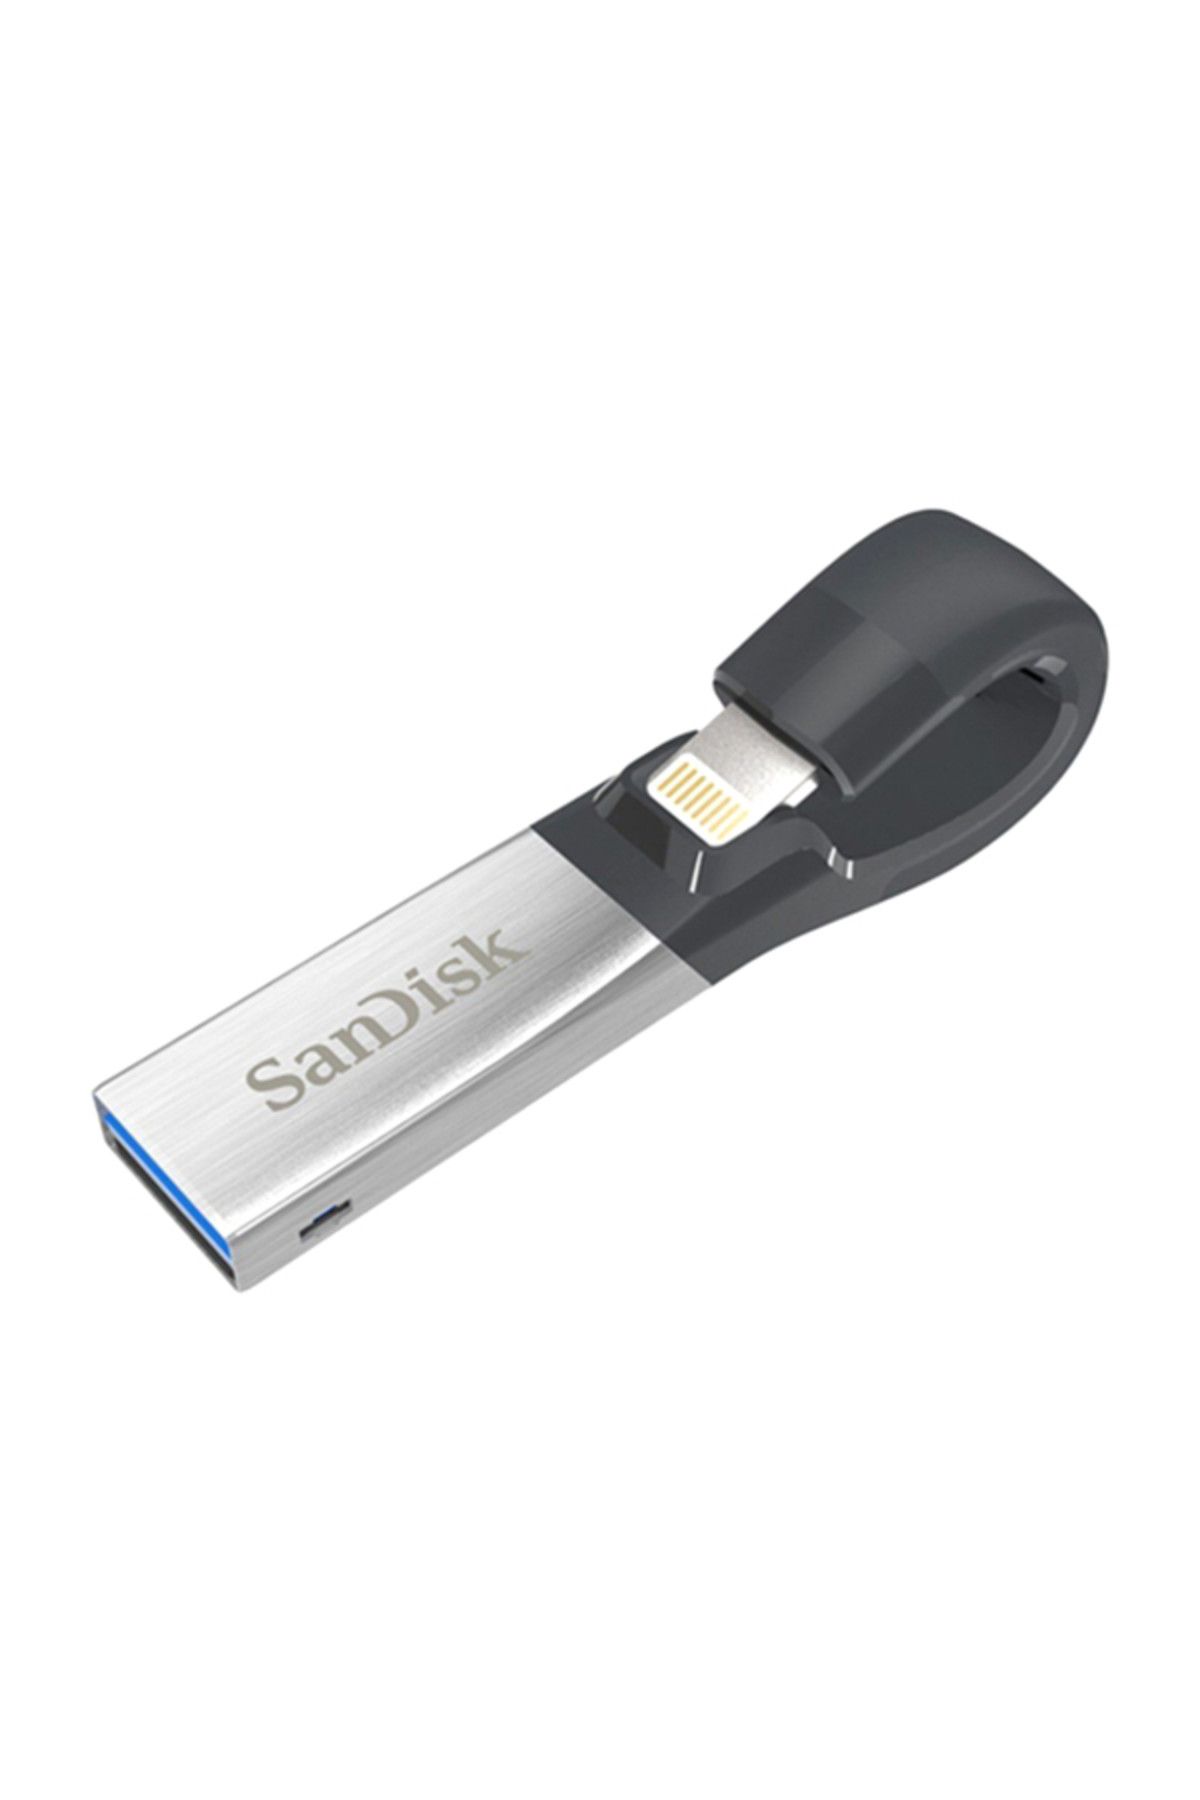 Sandisk iXpand Flash Drive 32 GB USB Bellek SDIX30C-032G-GN6NN